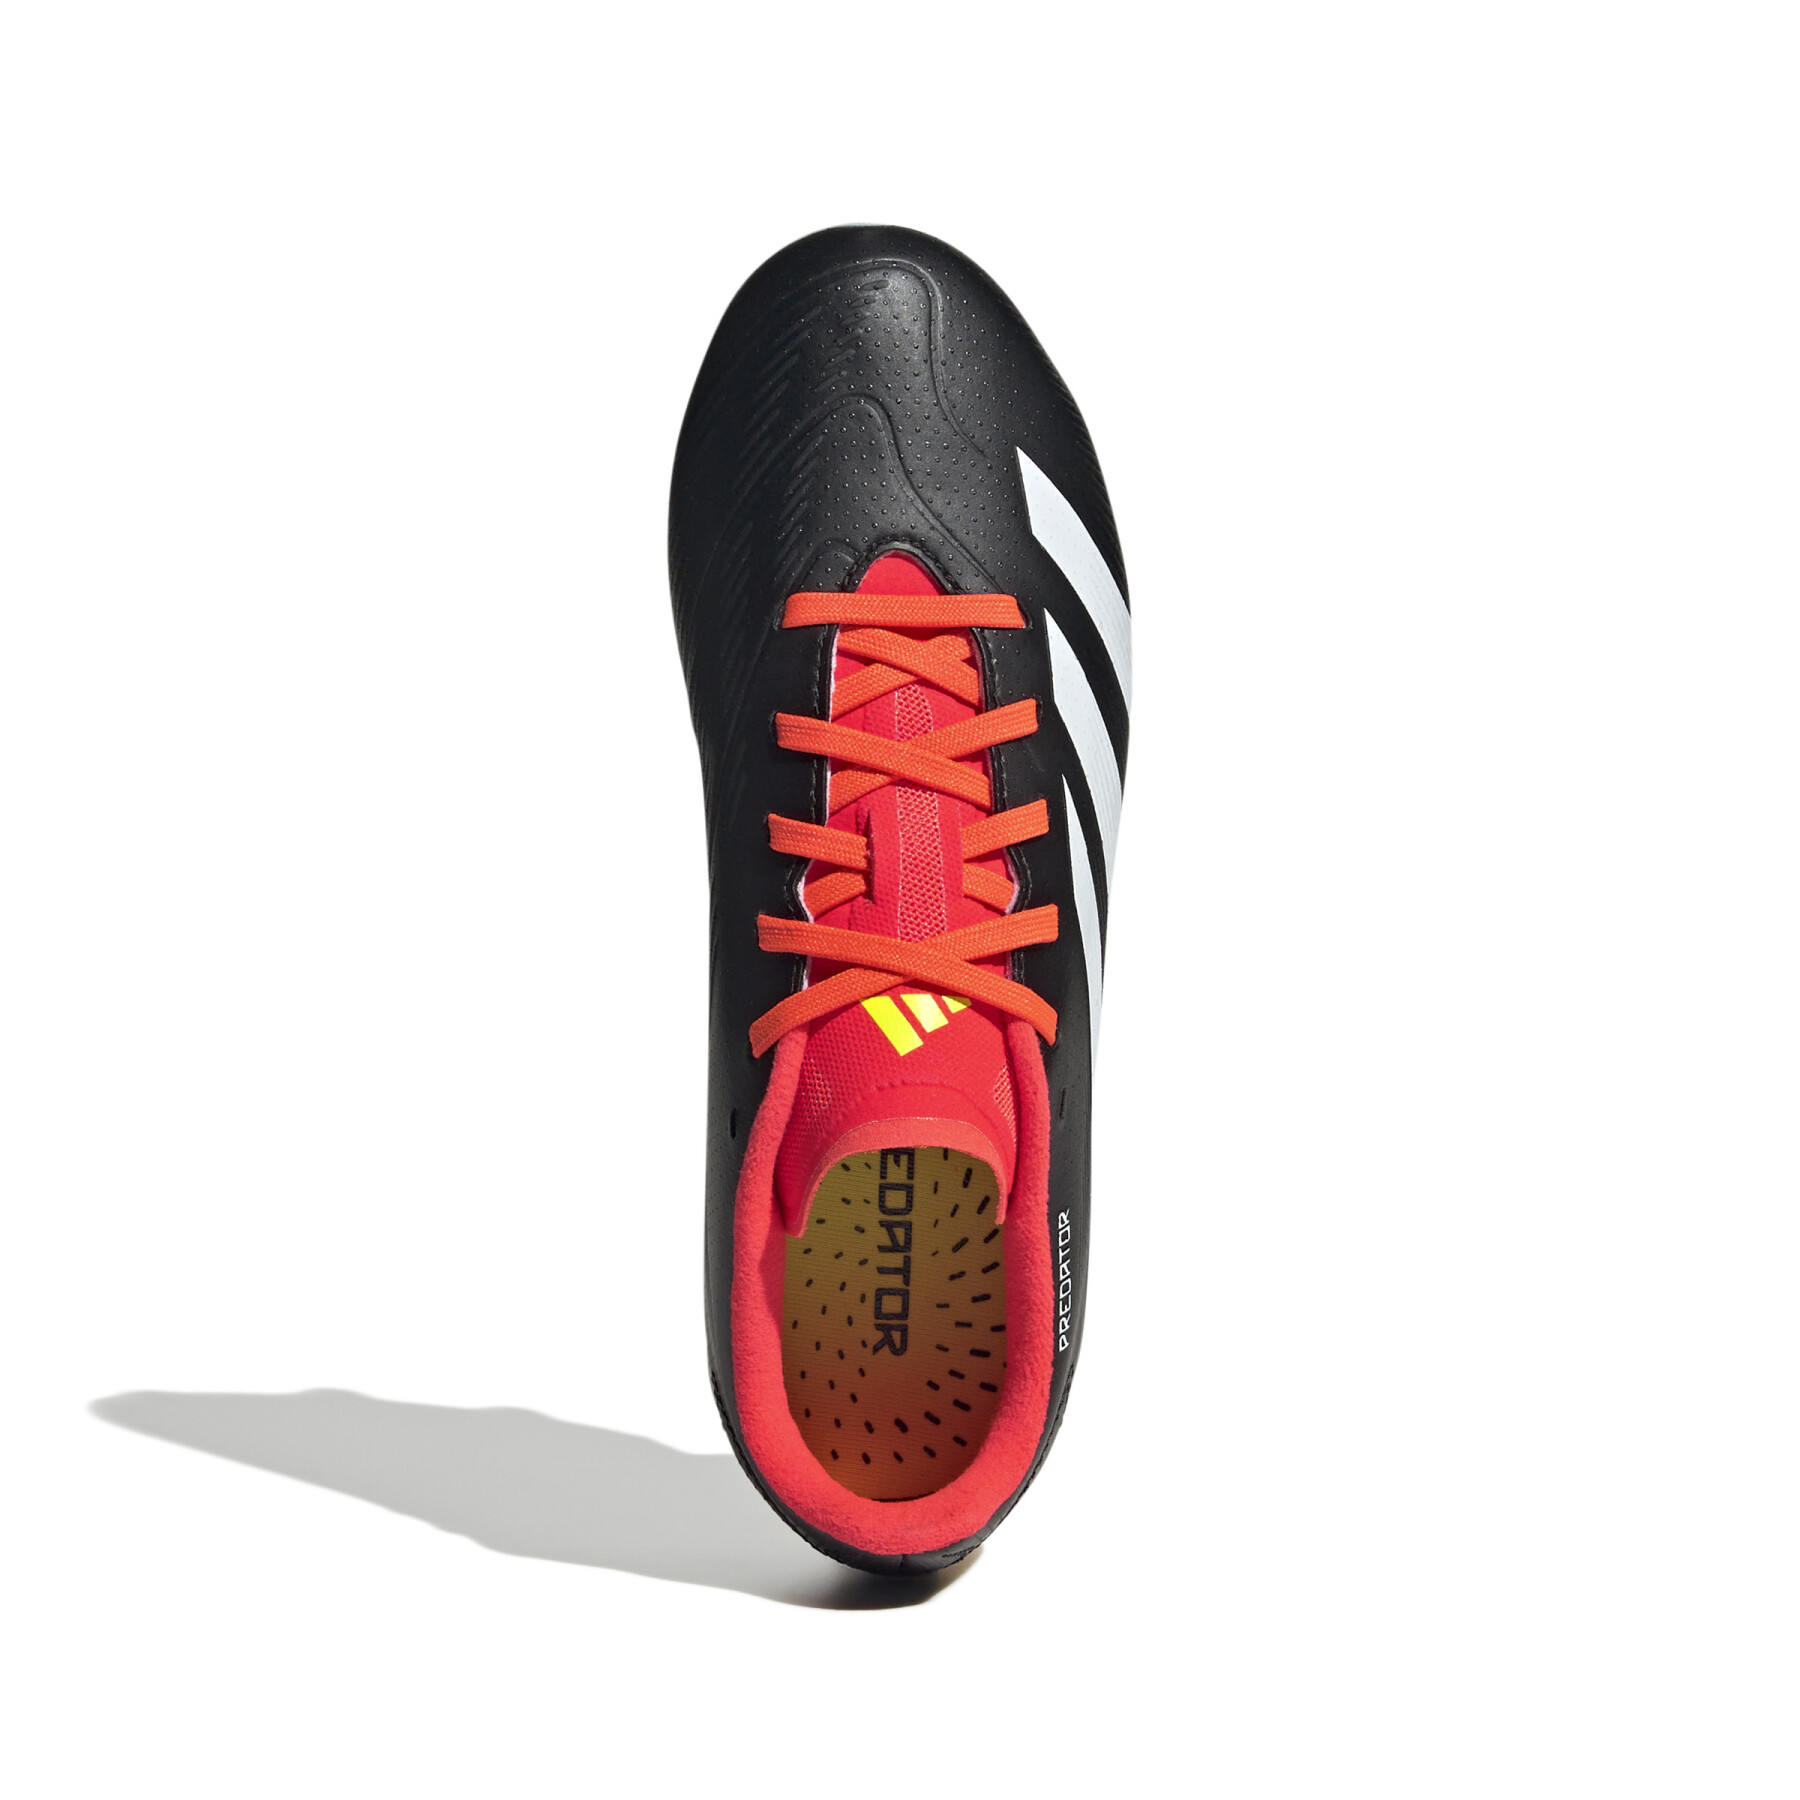 Children's soccer shoes adidas Predator League SG